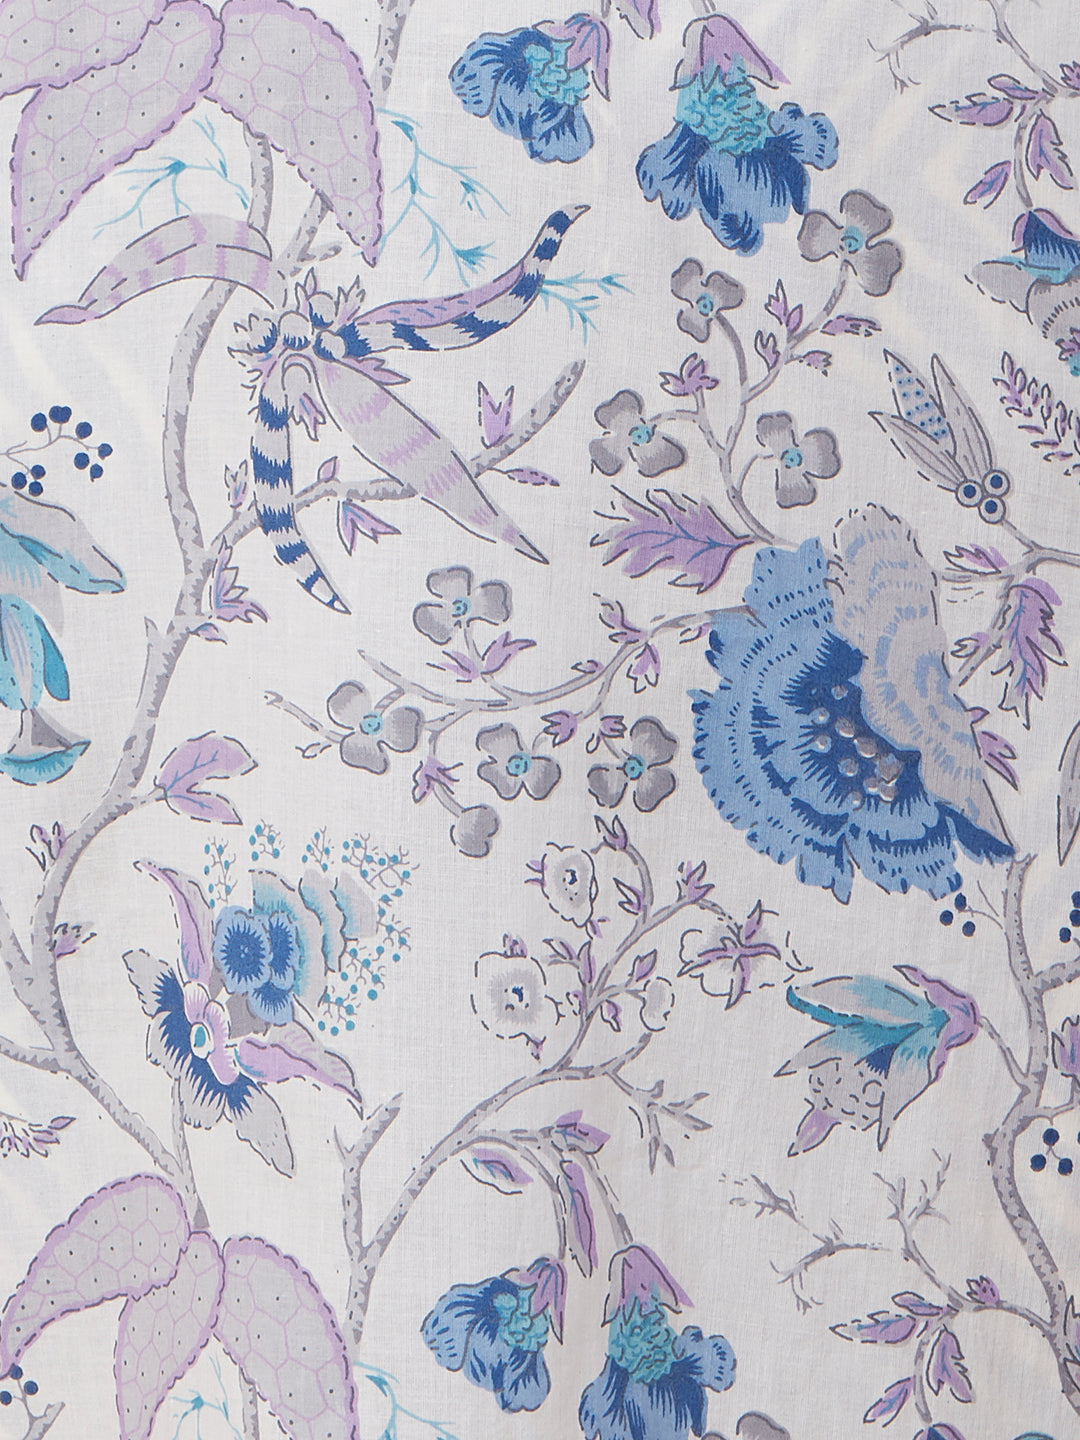 Floral Printed Mirror & Zari Embroidered Kurta With Chevron pants & Dupatta - Light Blue